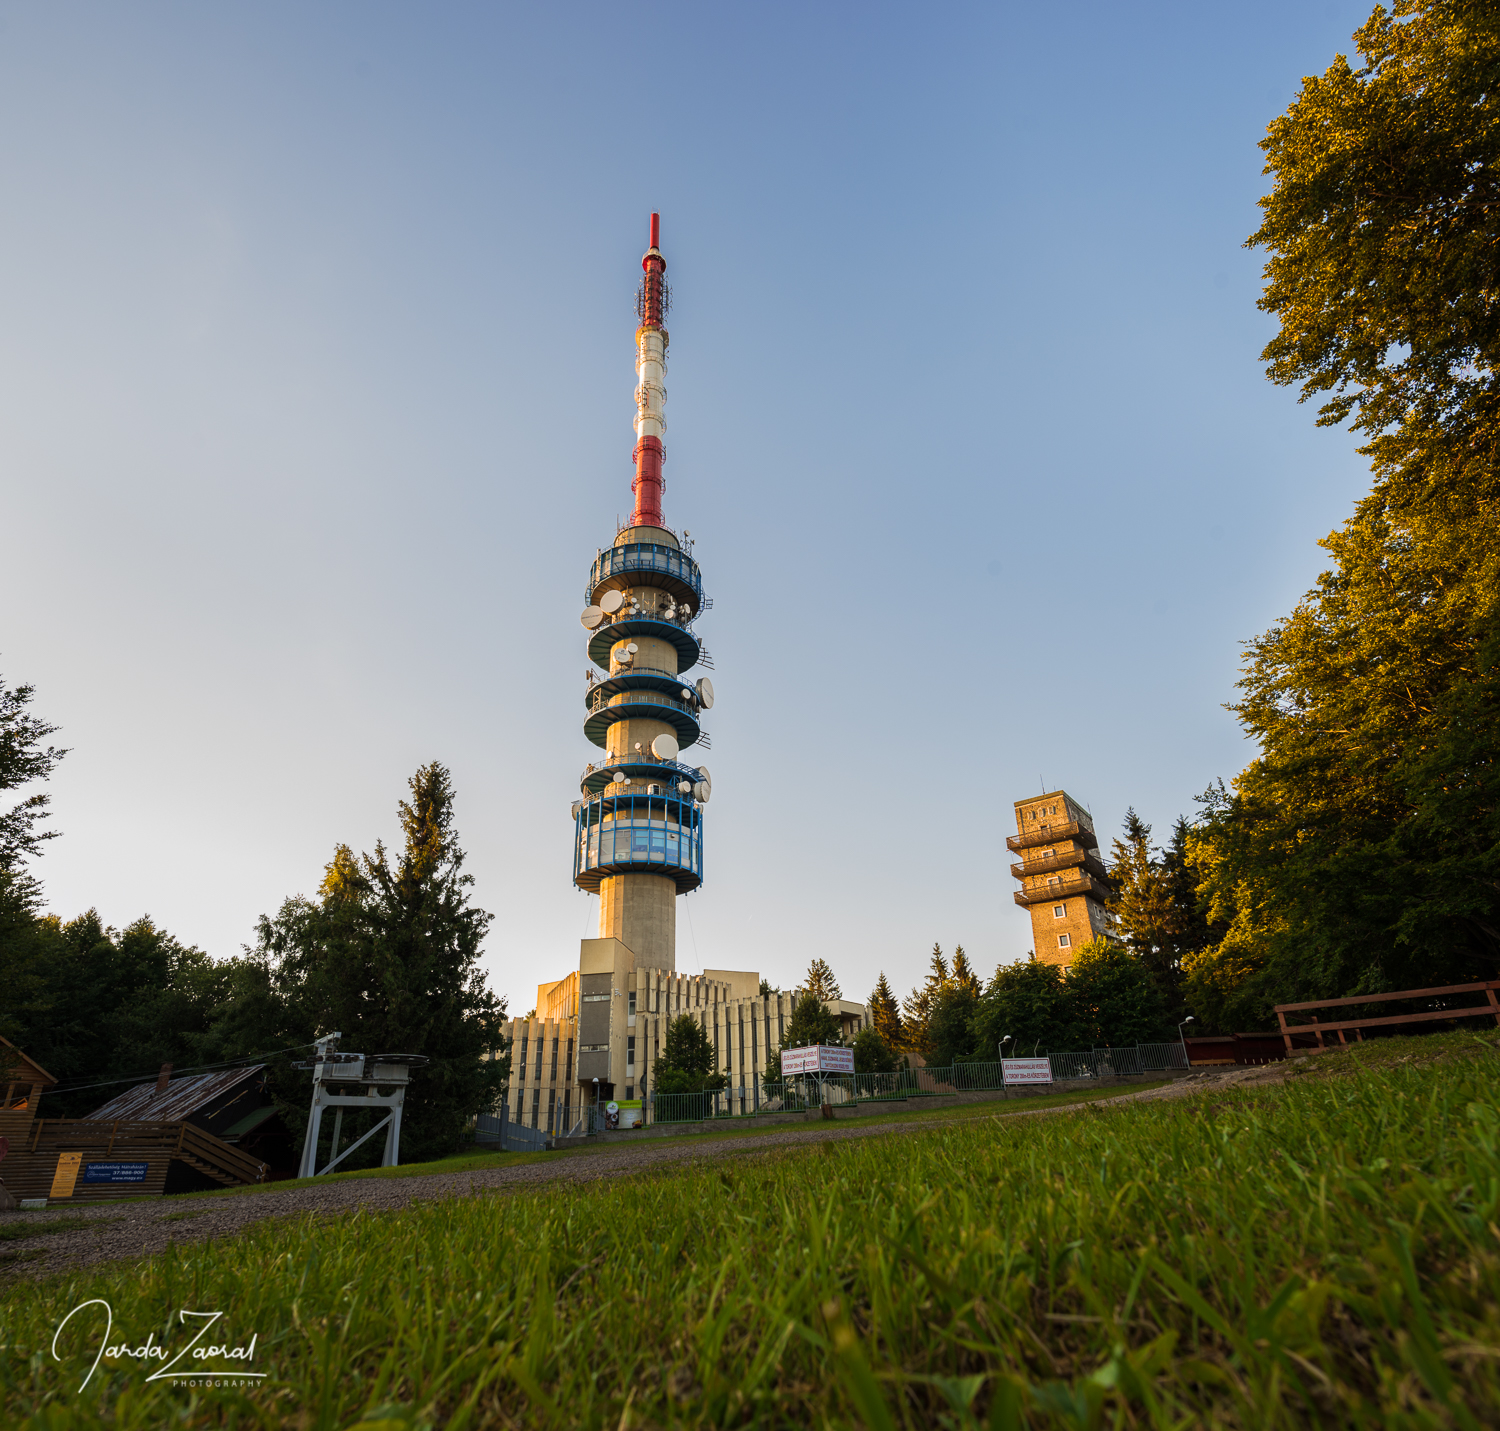 Observation tower at Kékes